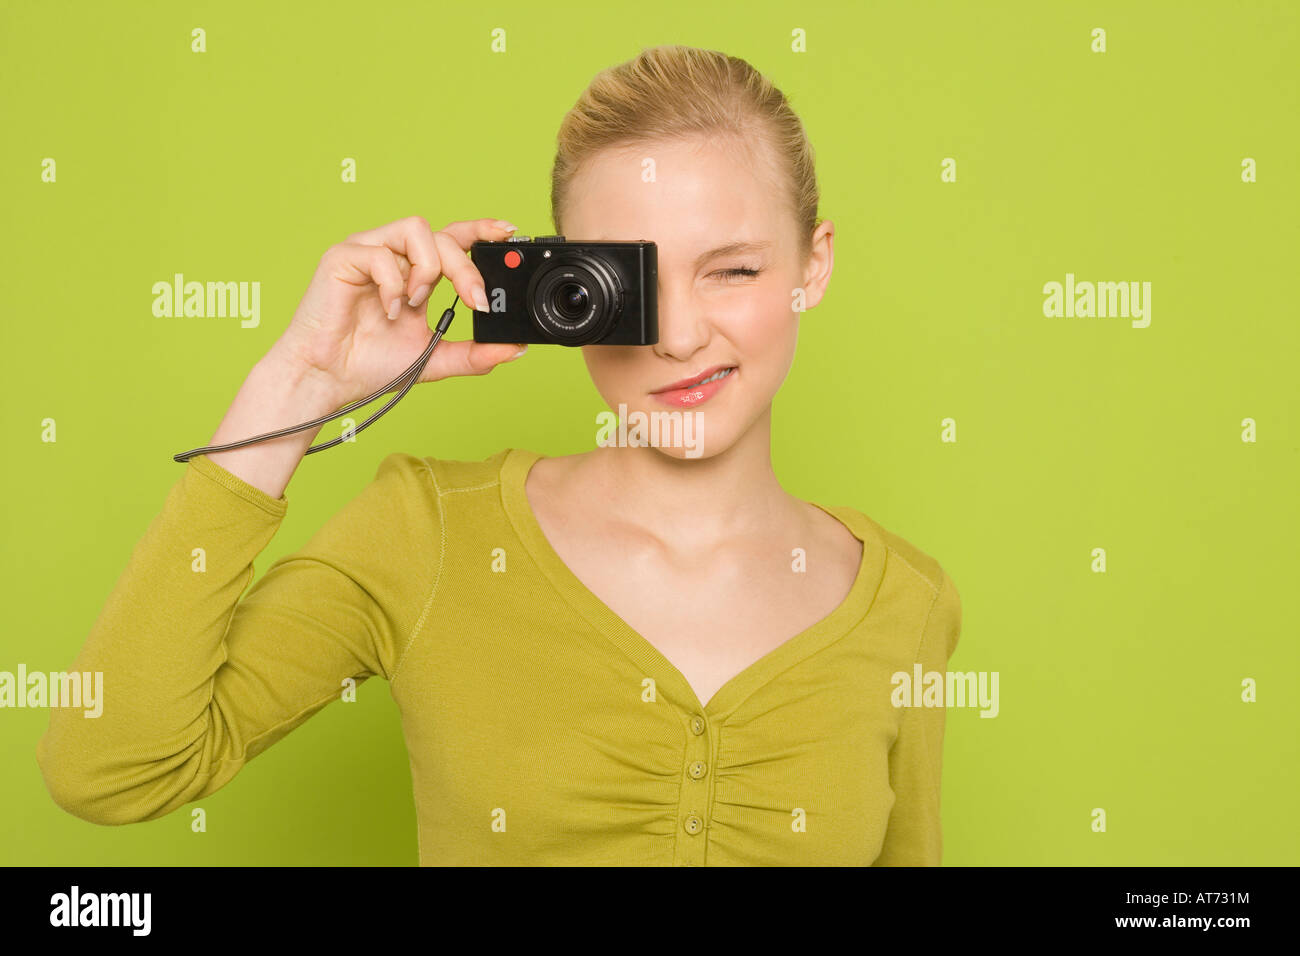 Woman with camera, portrait Banque D'Images